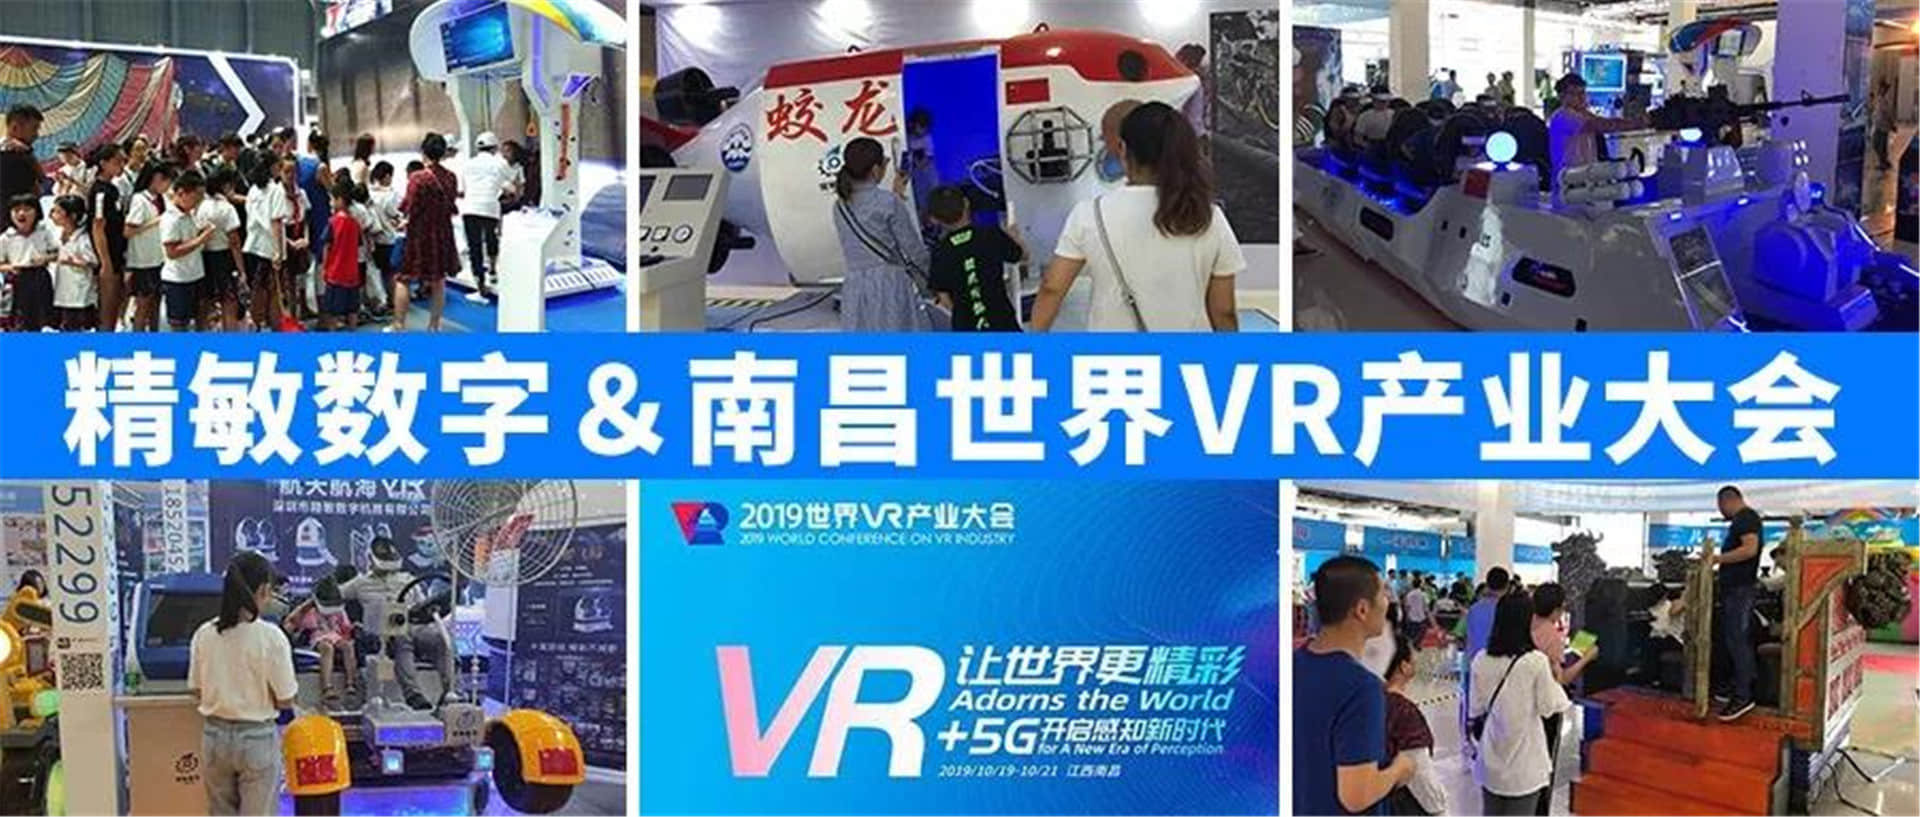 VR让世界更精彩——VR+5G开启感知新时代，聚焦全球目光的2019世界产业大会将于10月19日-21日在南昌隆重开幕。